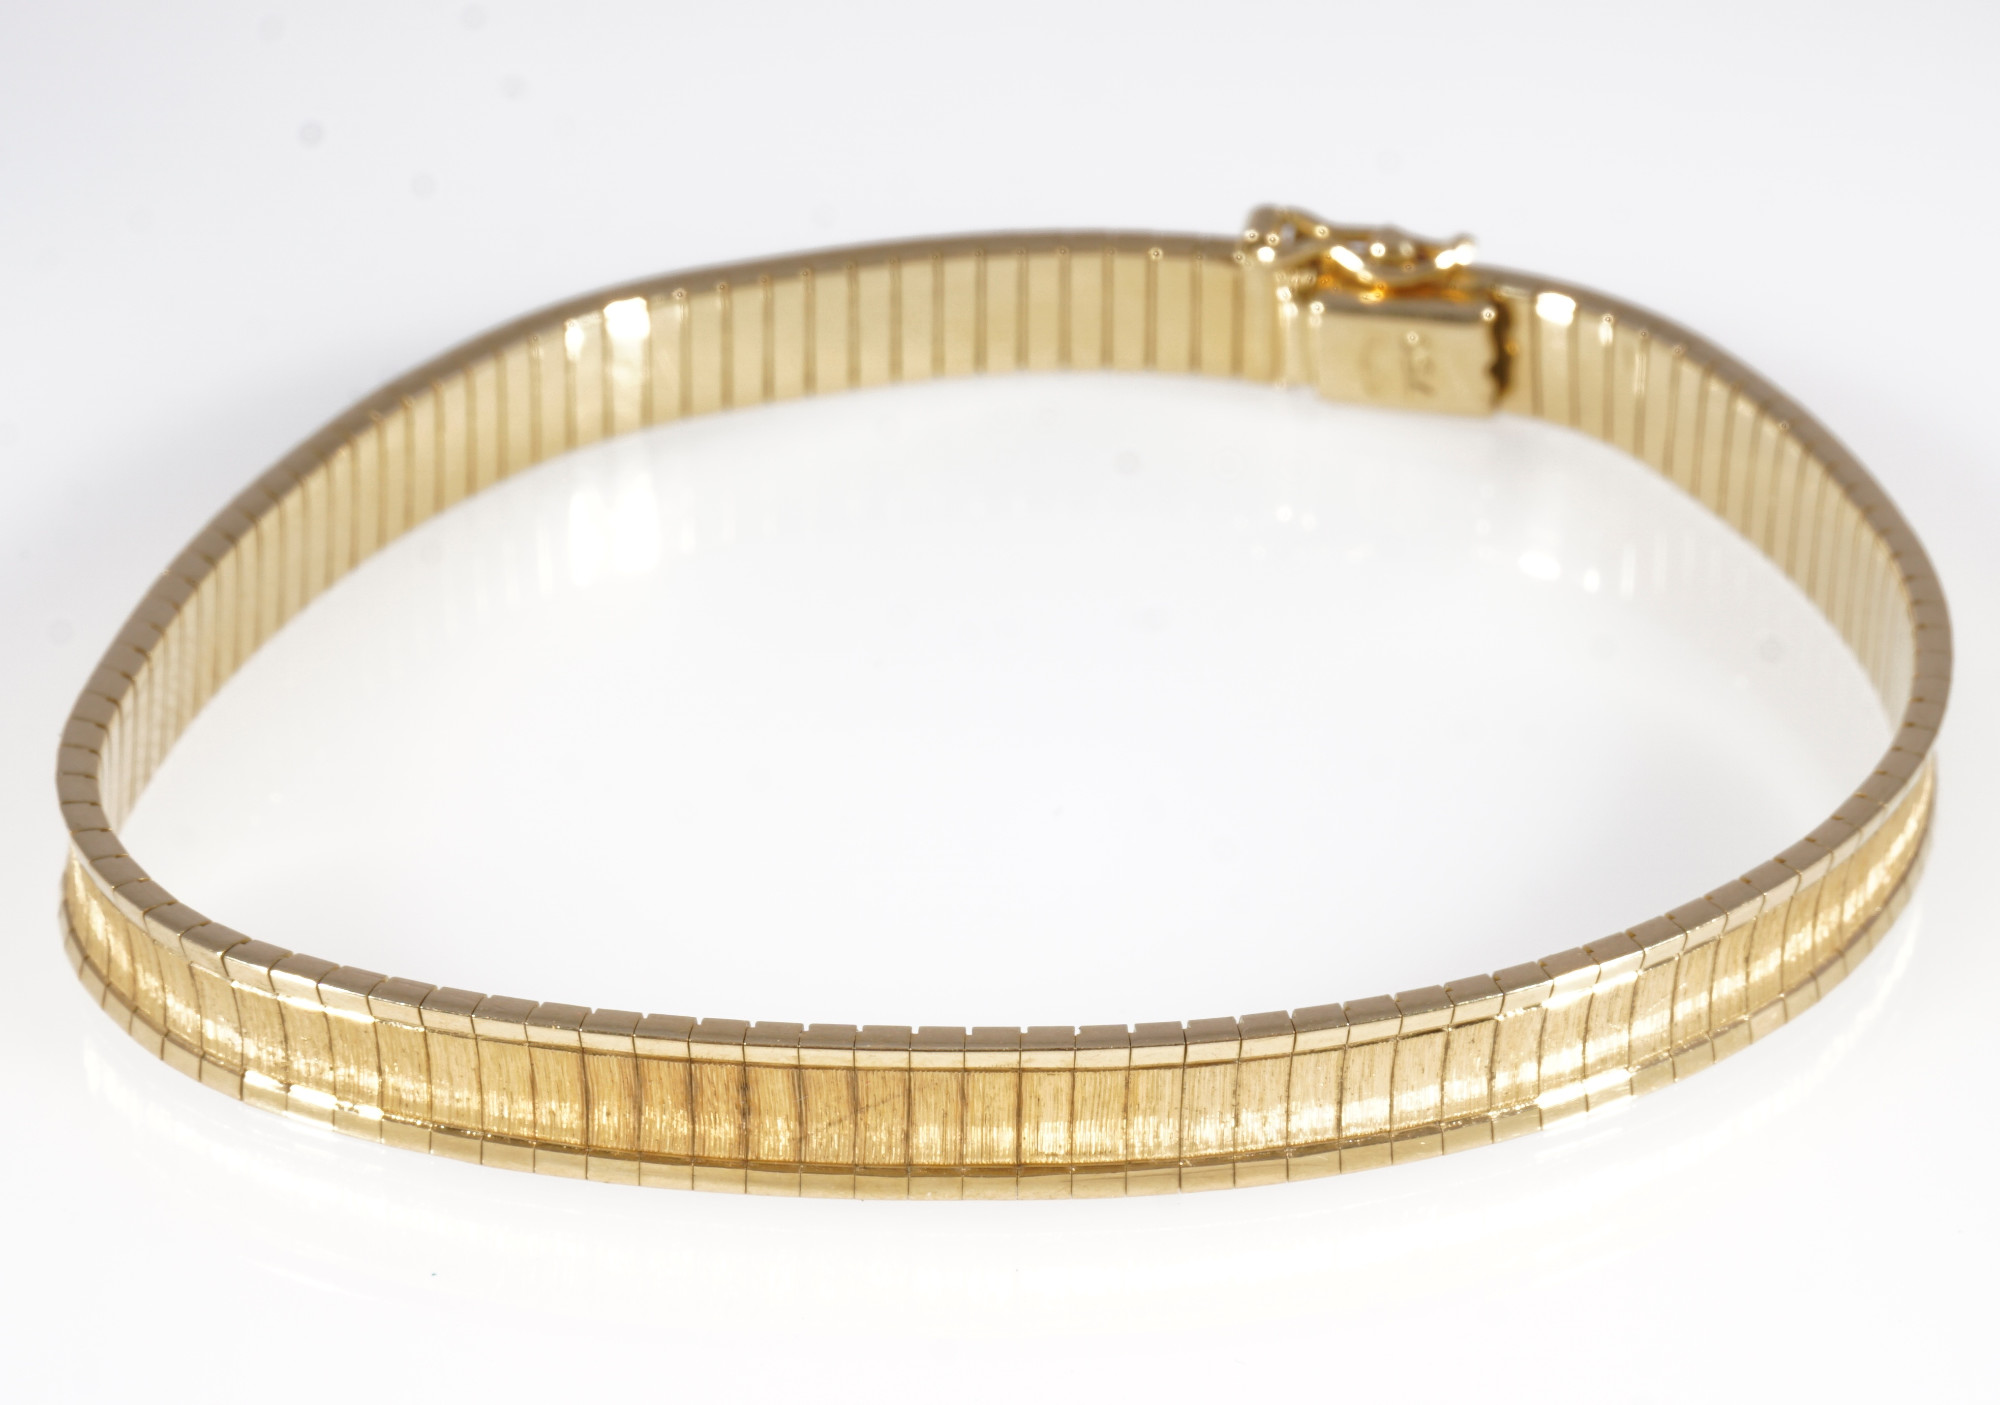 750 jewelry set - gold necklace and bracelet, 18K Gold Schmuckset - Collier und Armband, - Image 3 of 5